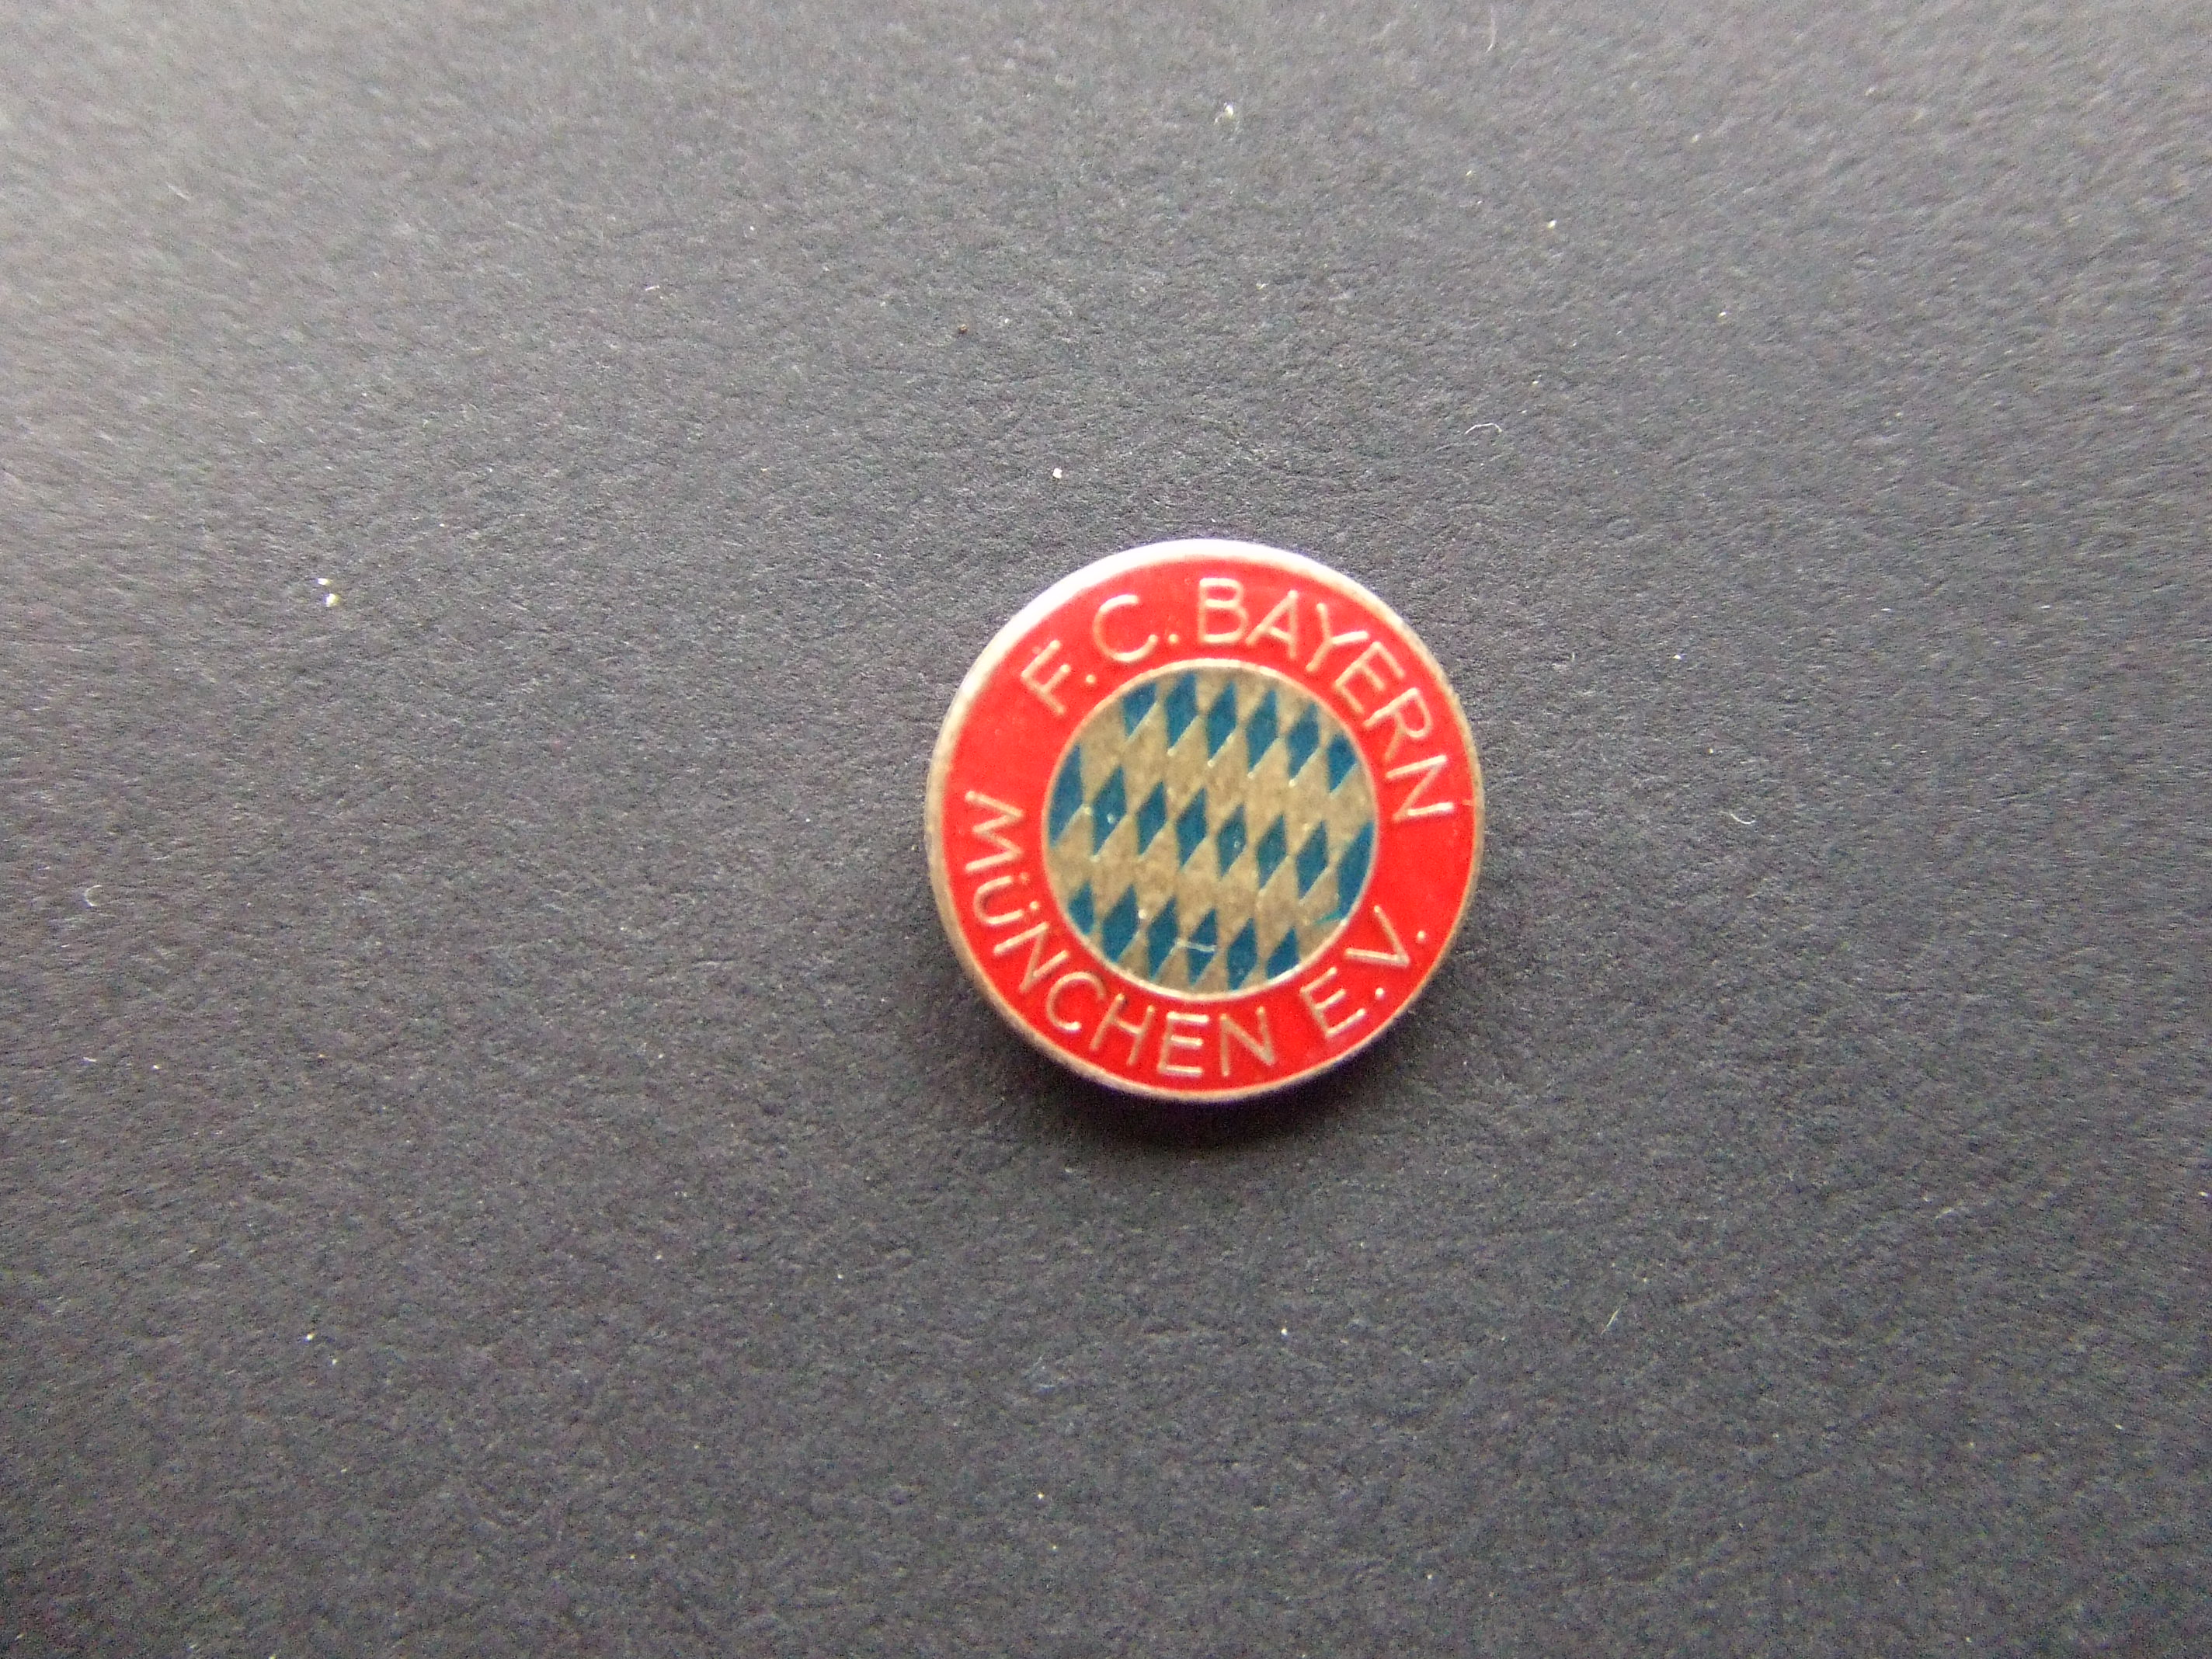 Voetbalclub FC Bayern Munchen Duitsland